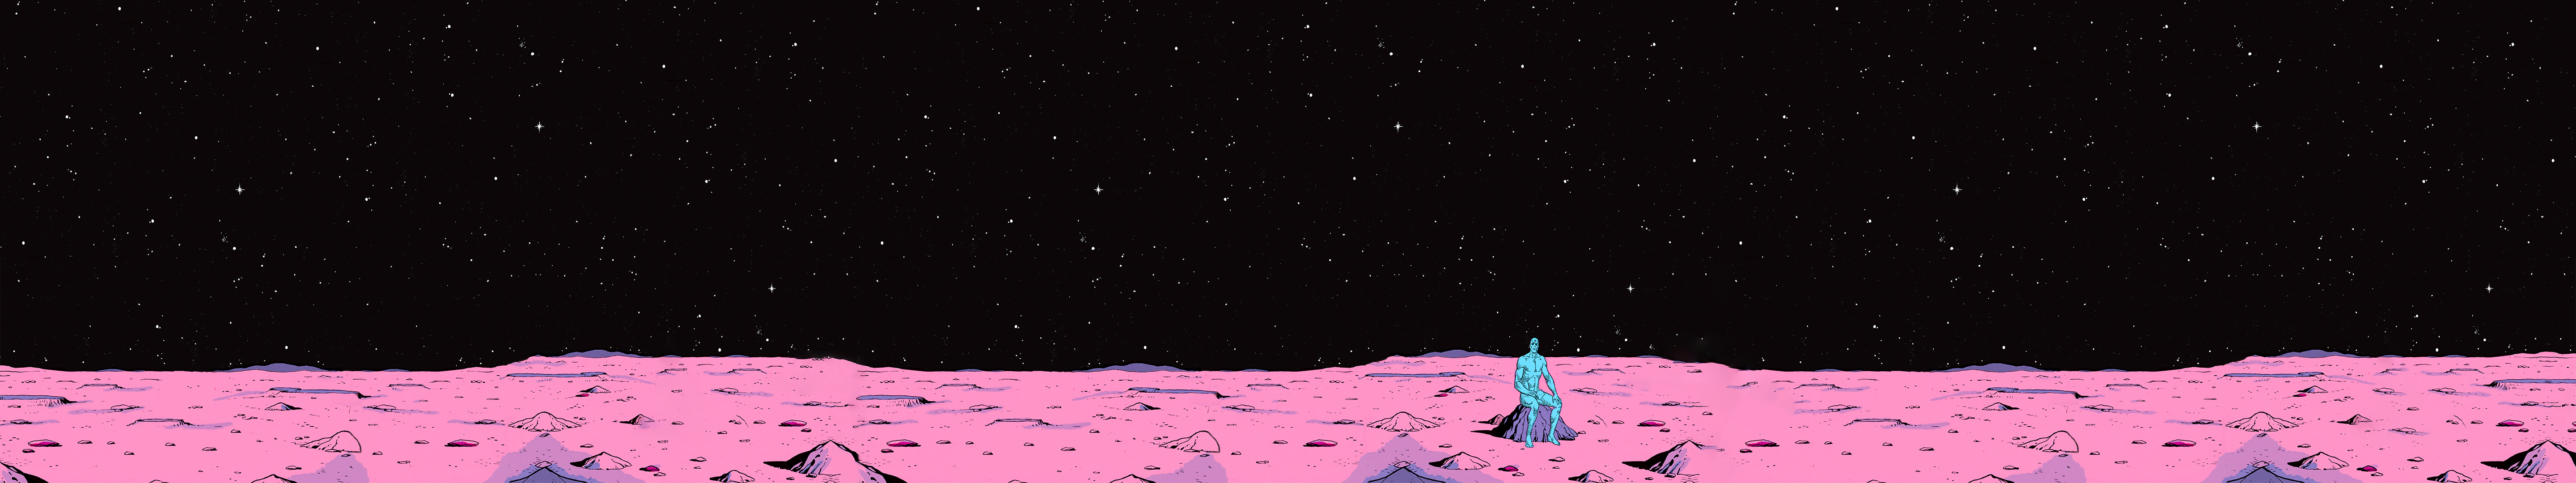 Dr Manhattan Watchmen DC Comics Comics Ultrawide Comic Art Alan Moore Alone Sitting Stars Space 5760x1080